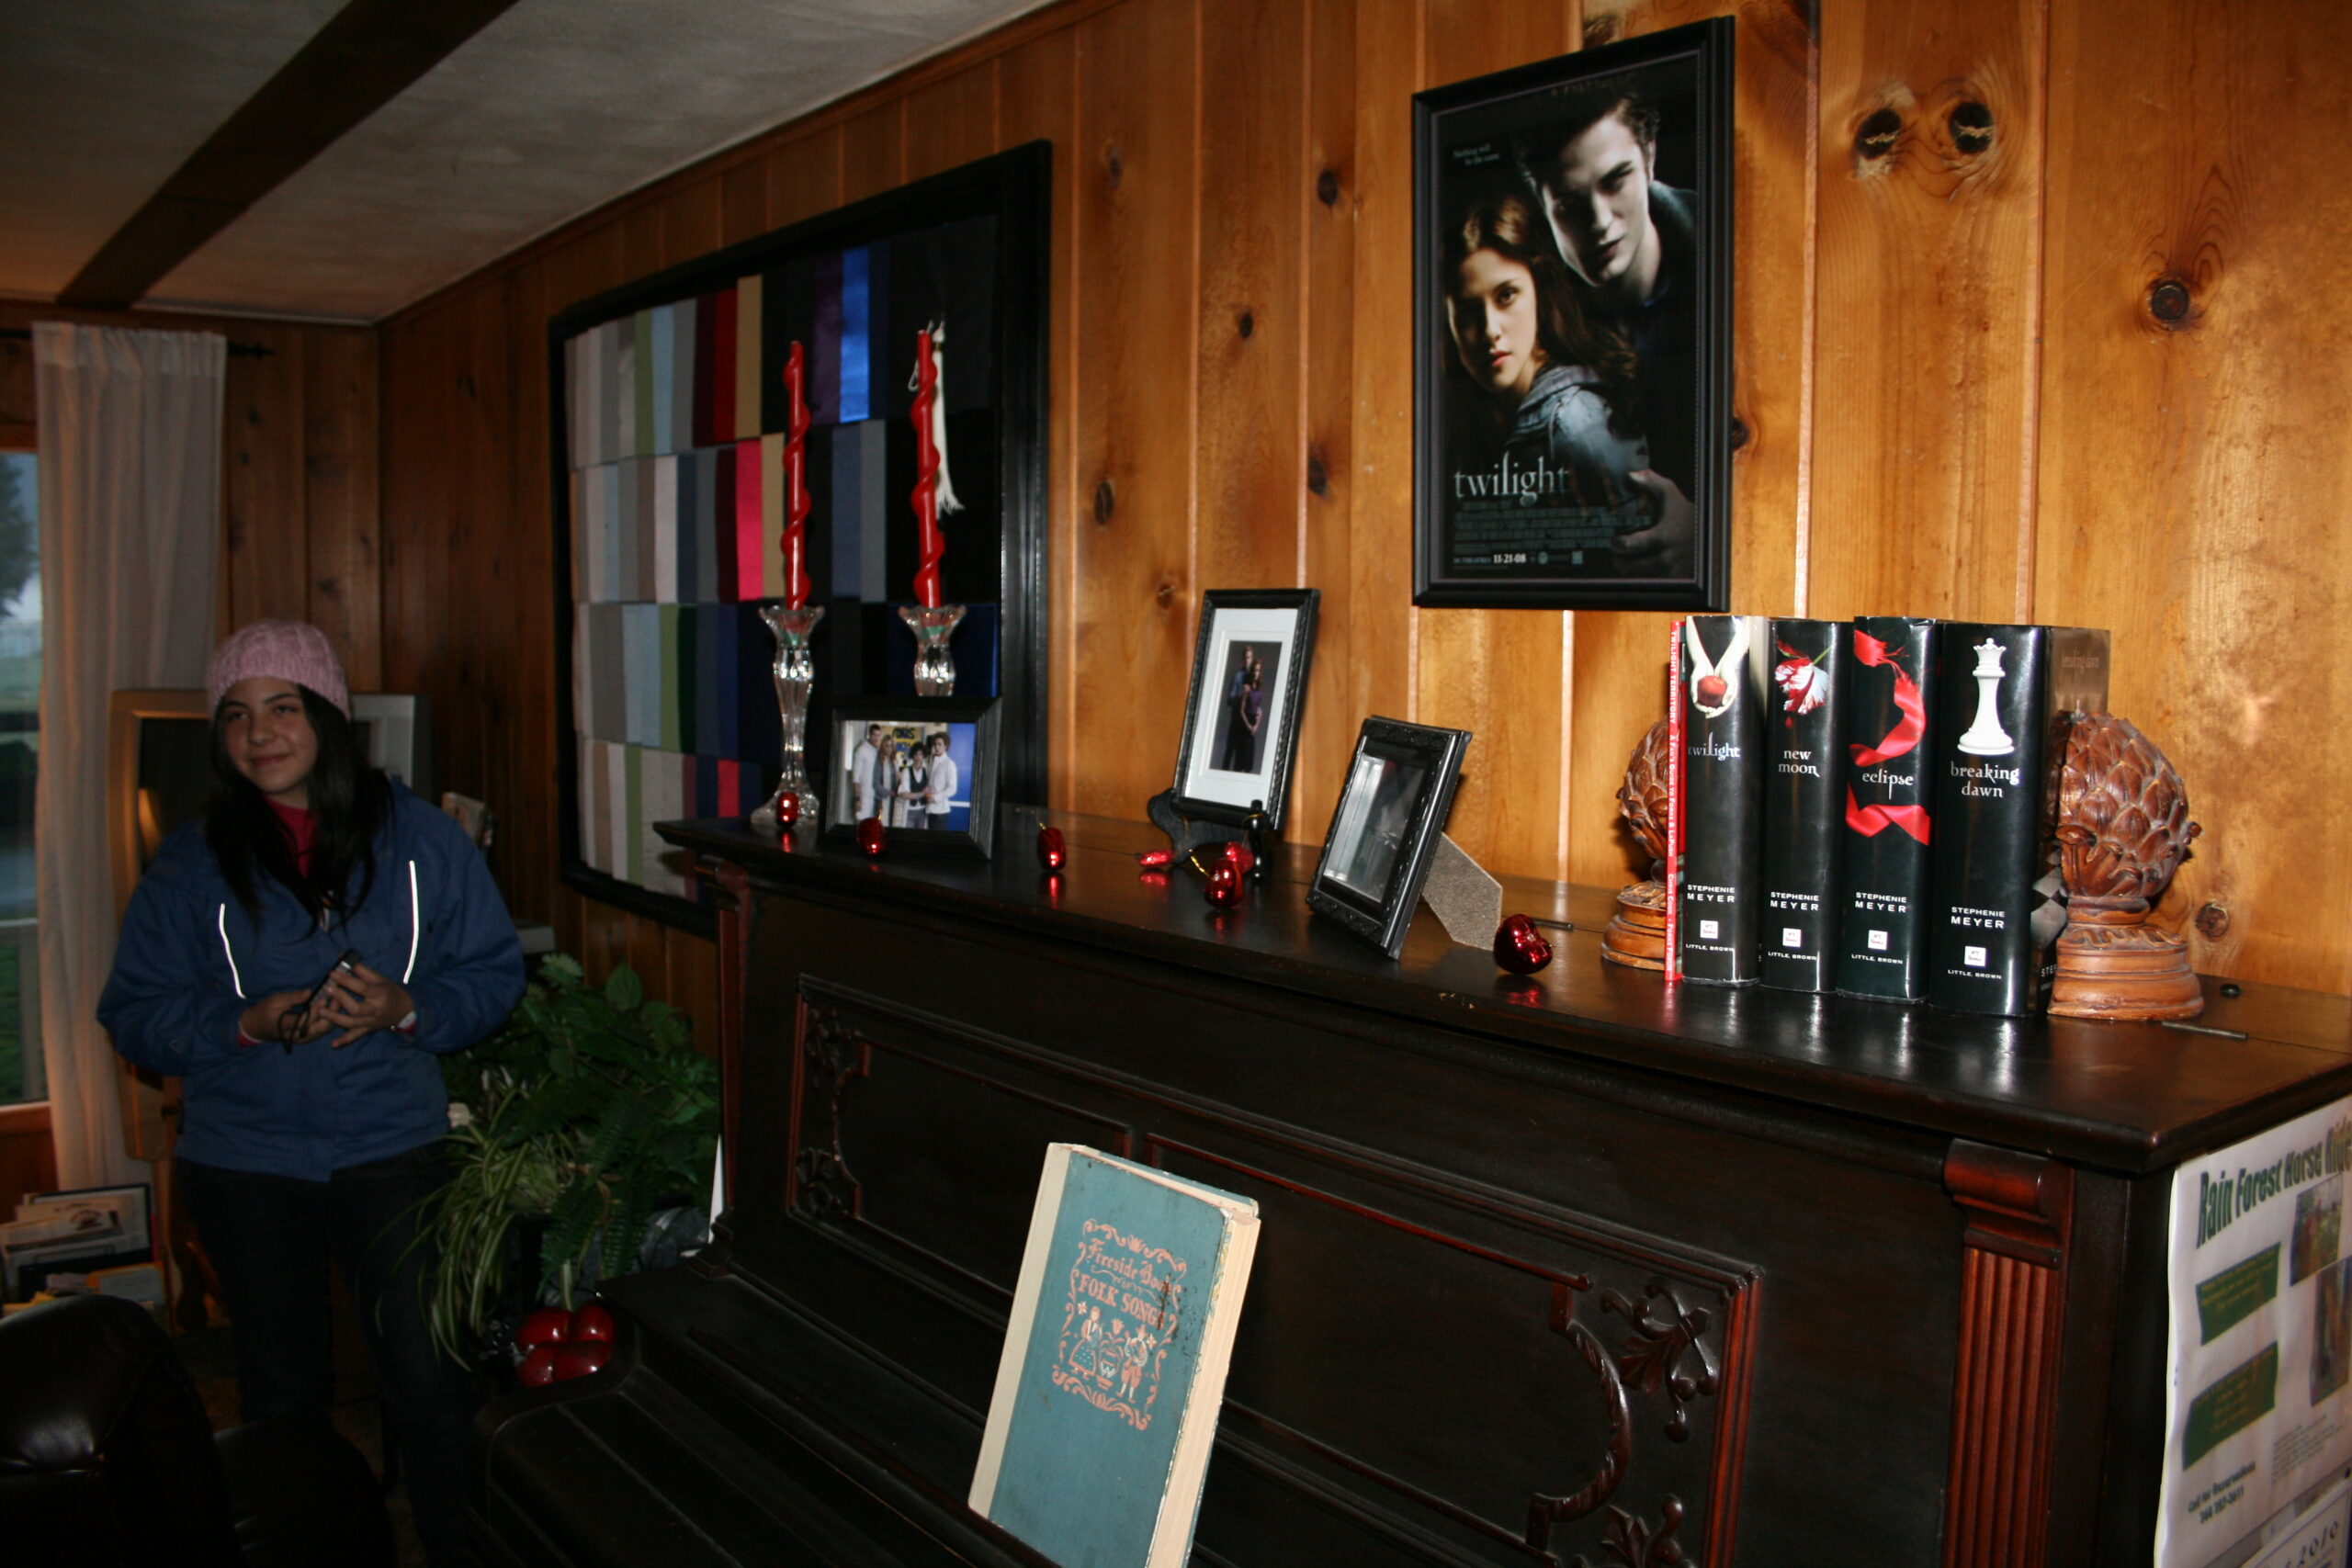 Twilight memorabilia and graduation caps sit in the living room of the Miller Tree Inn.